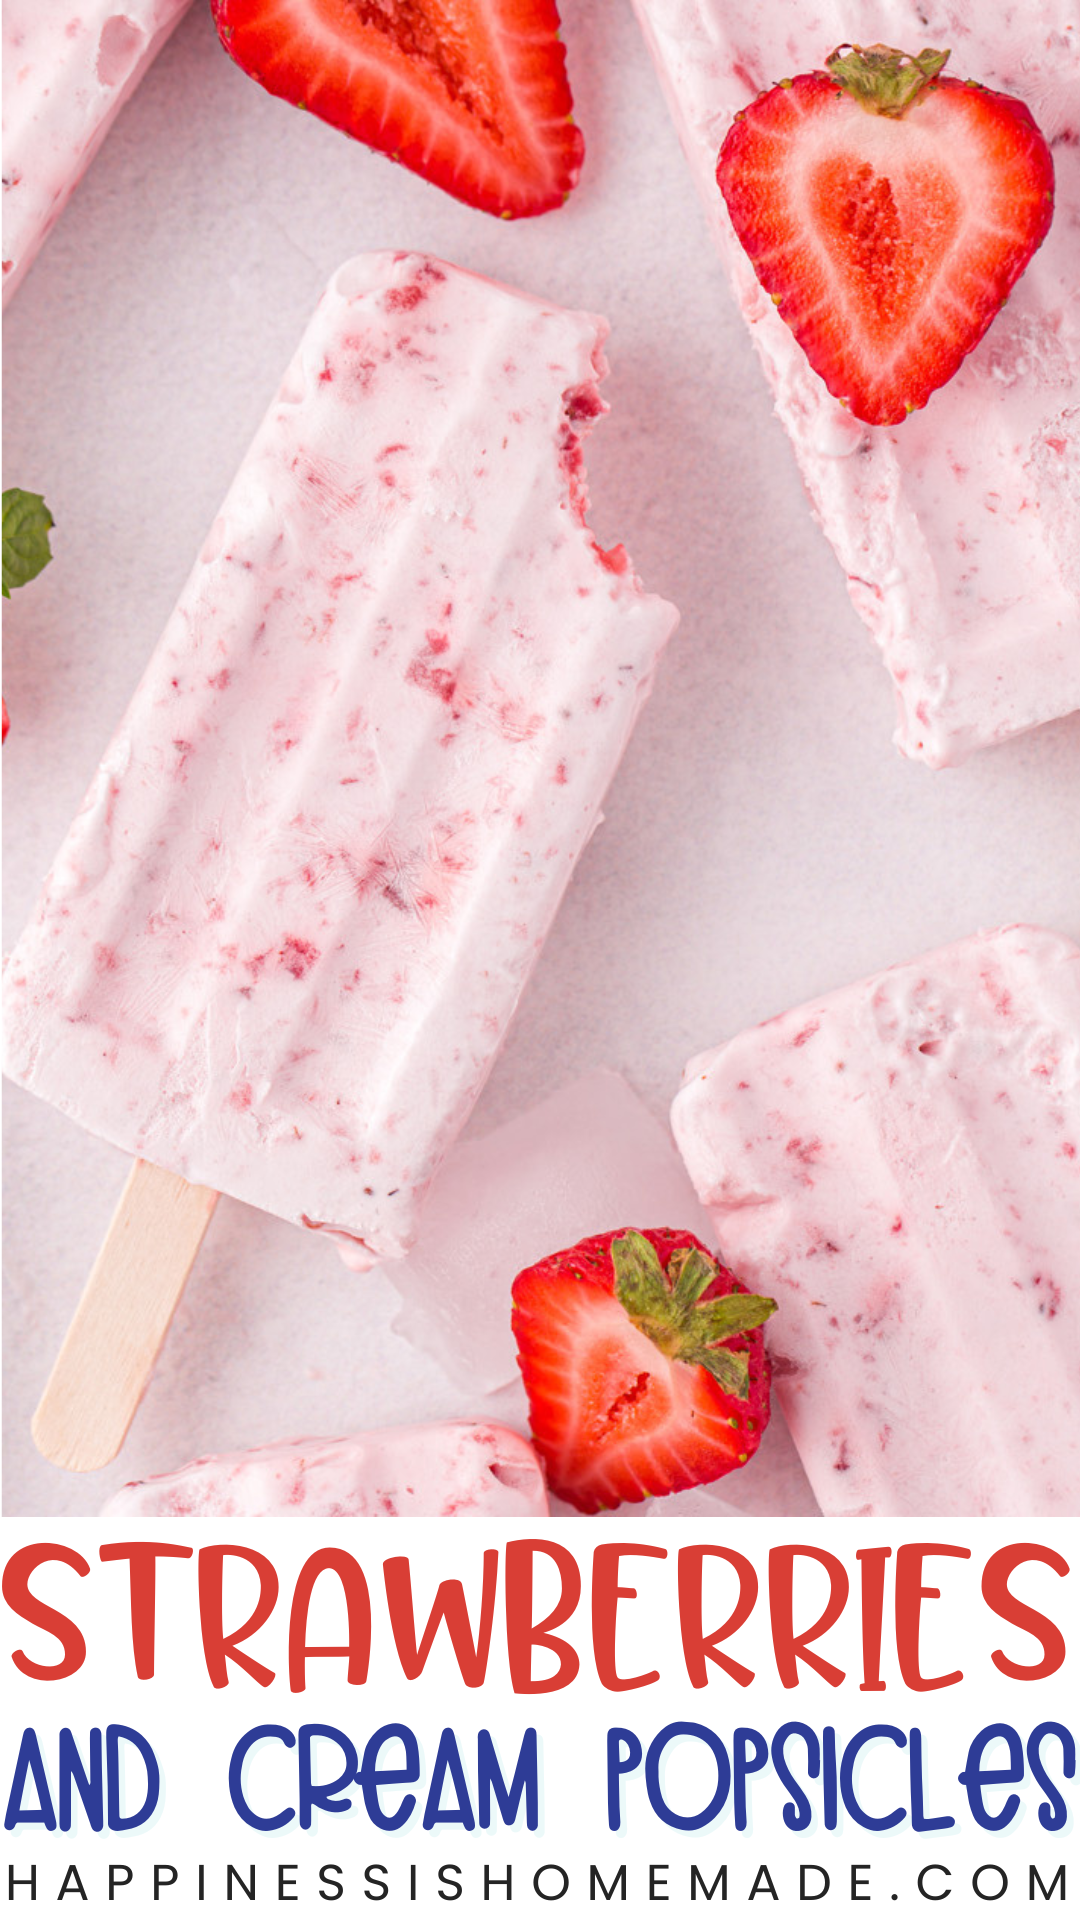 Strawberries and Cream popsicles recipe